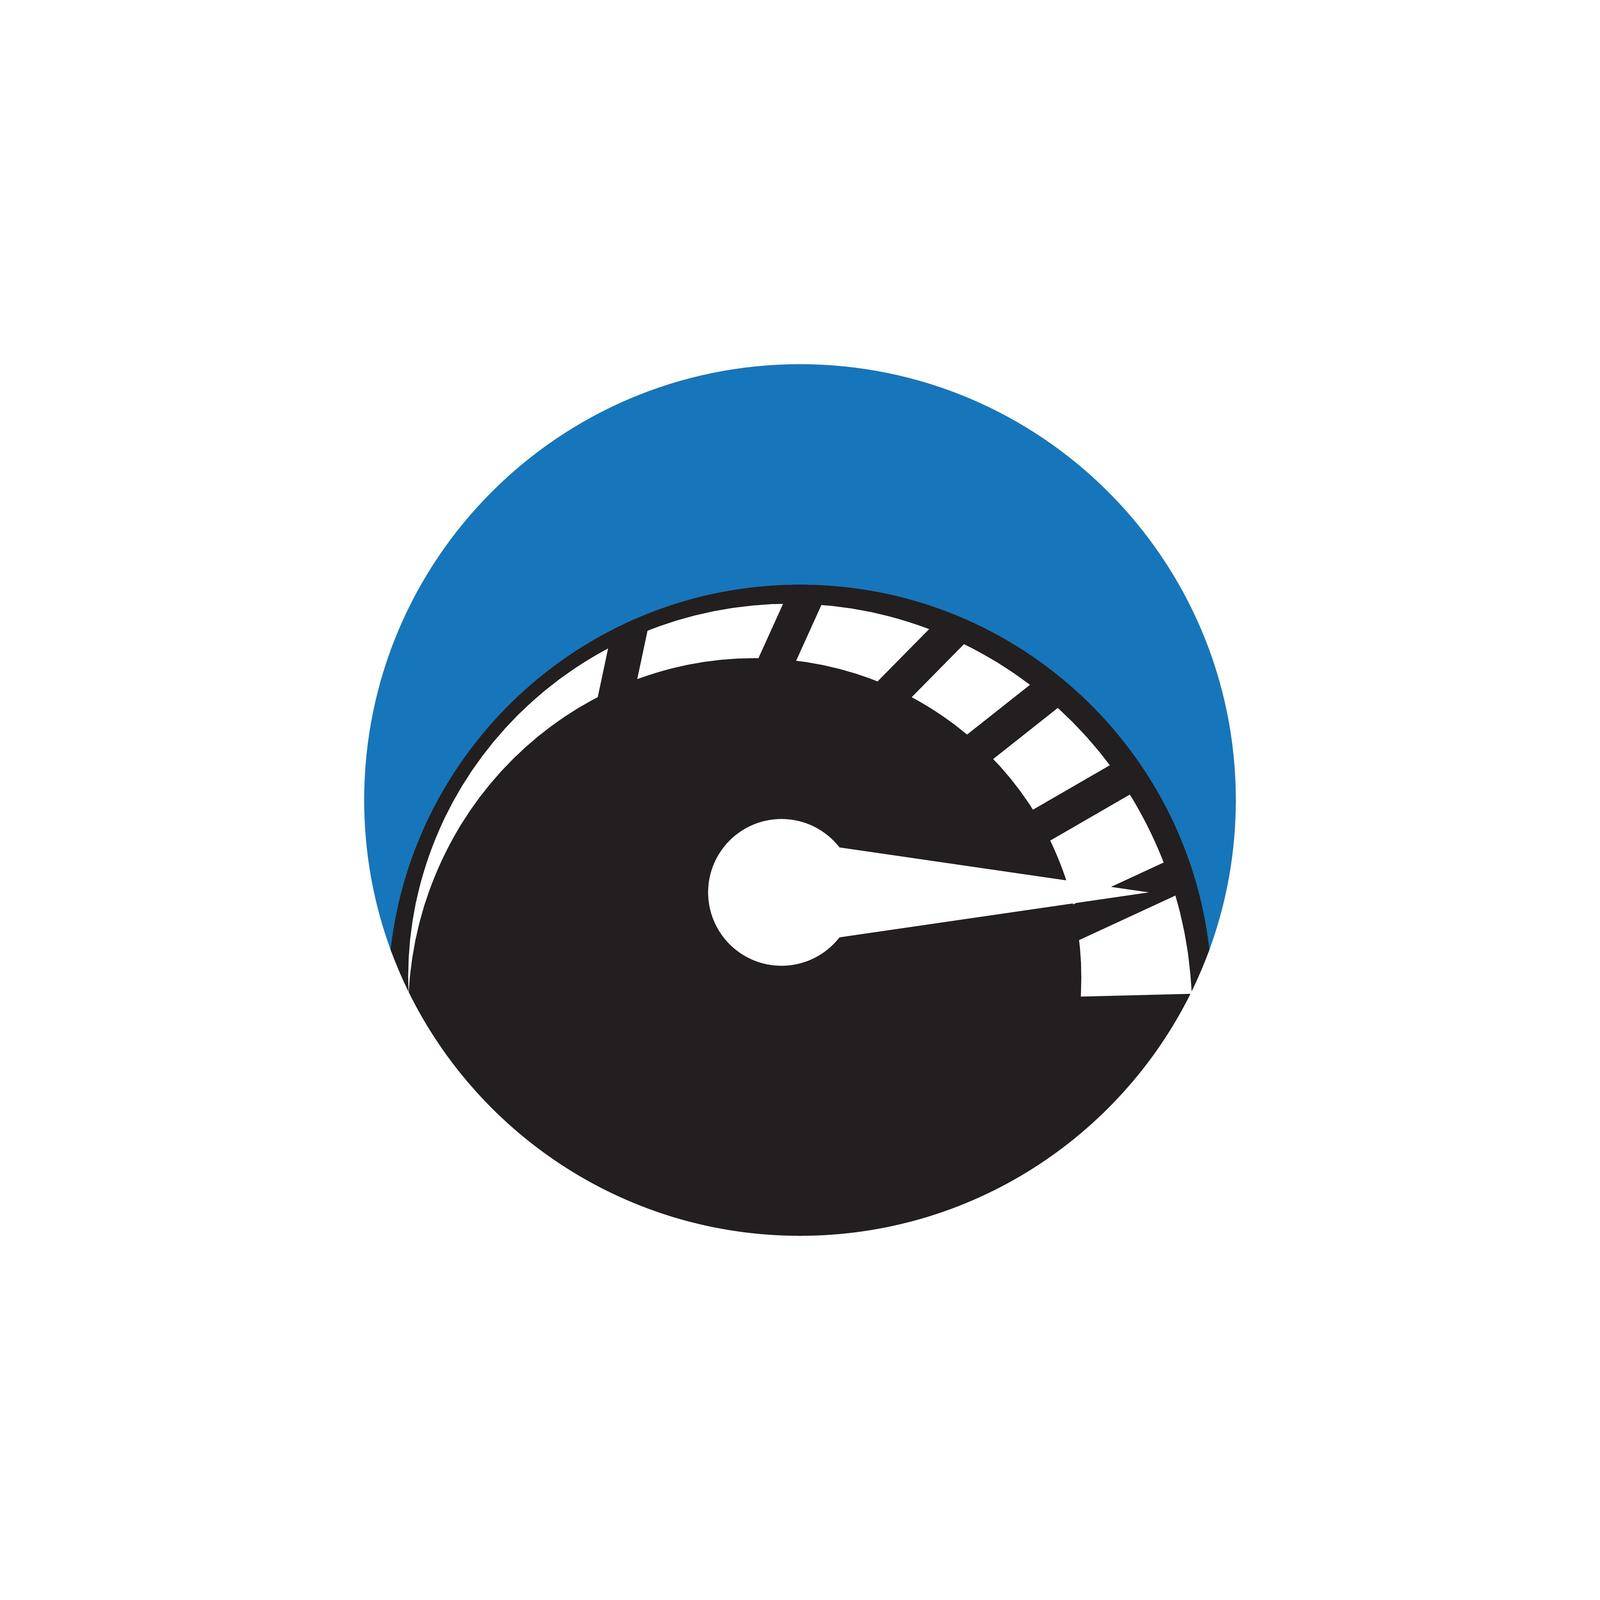 speedo meter logo by awk